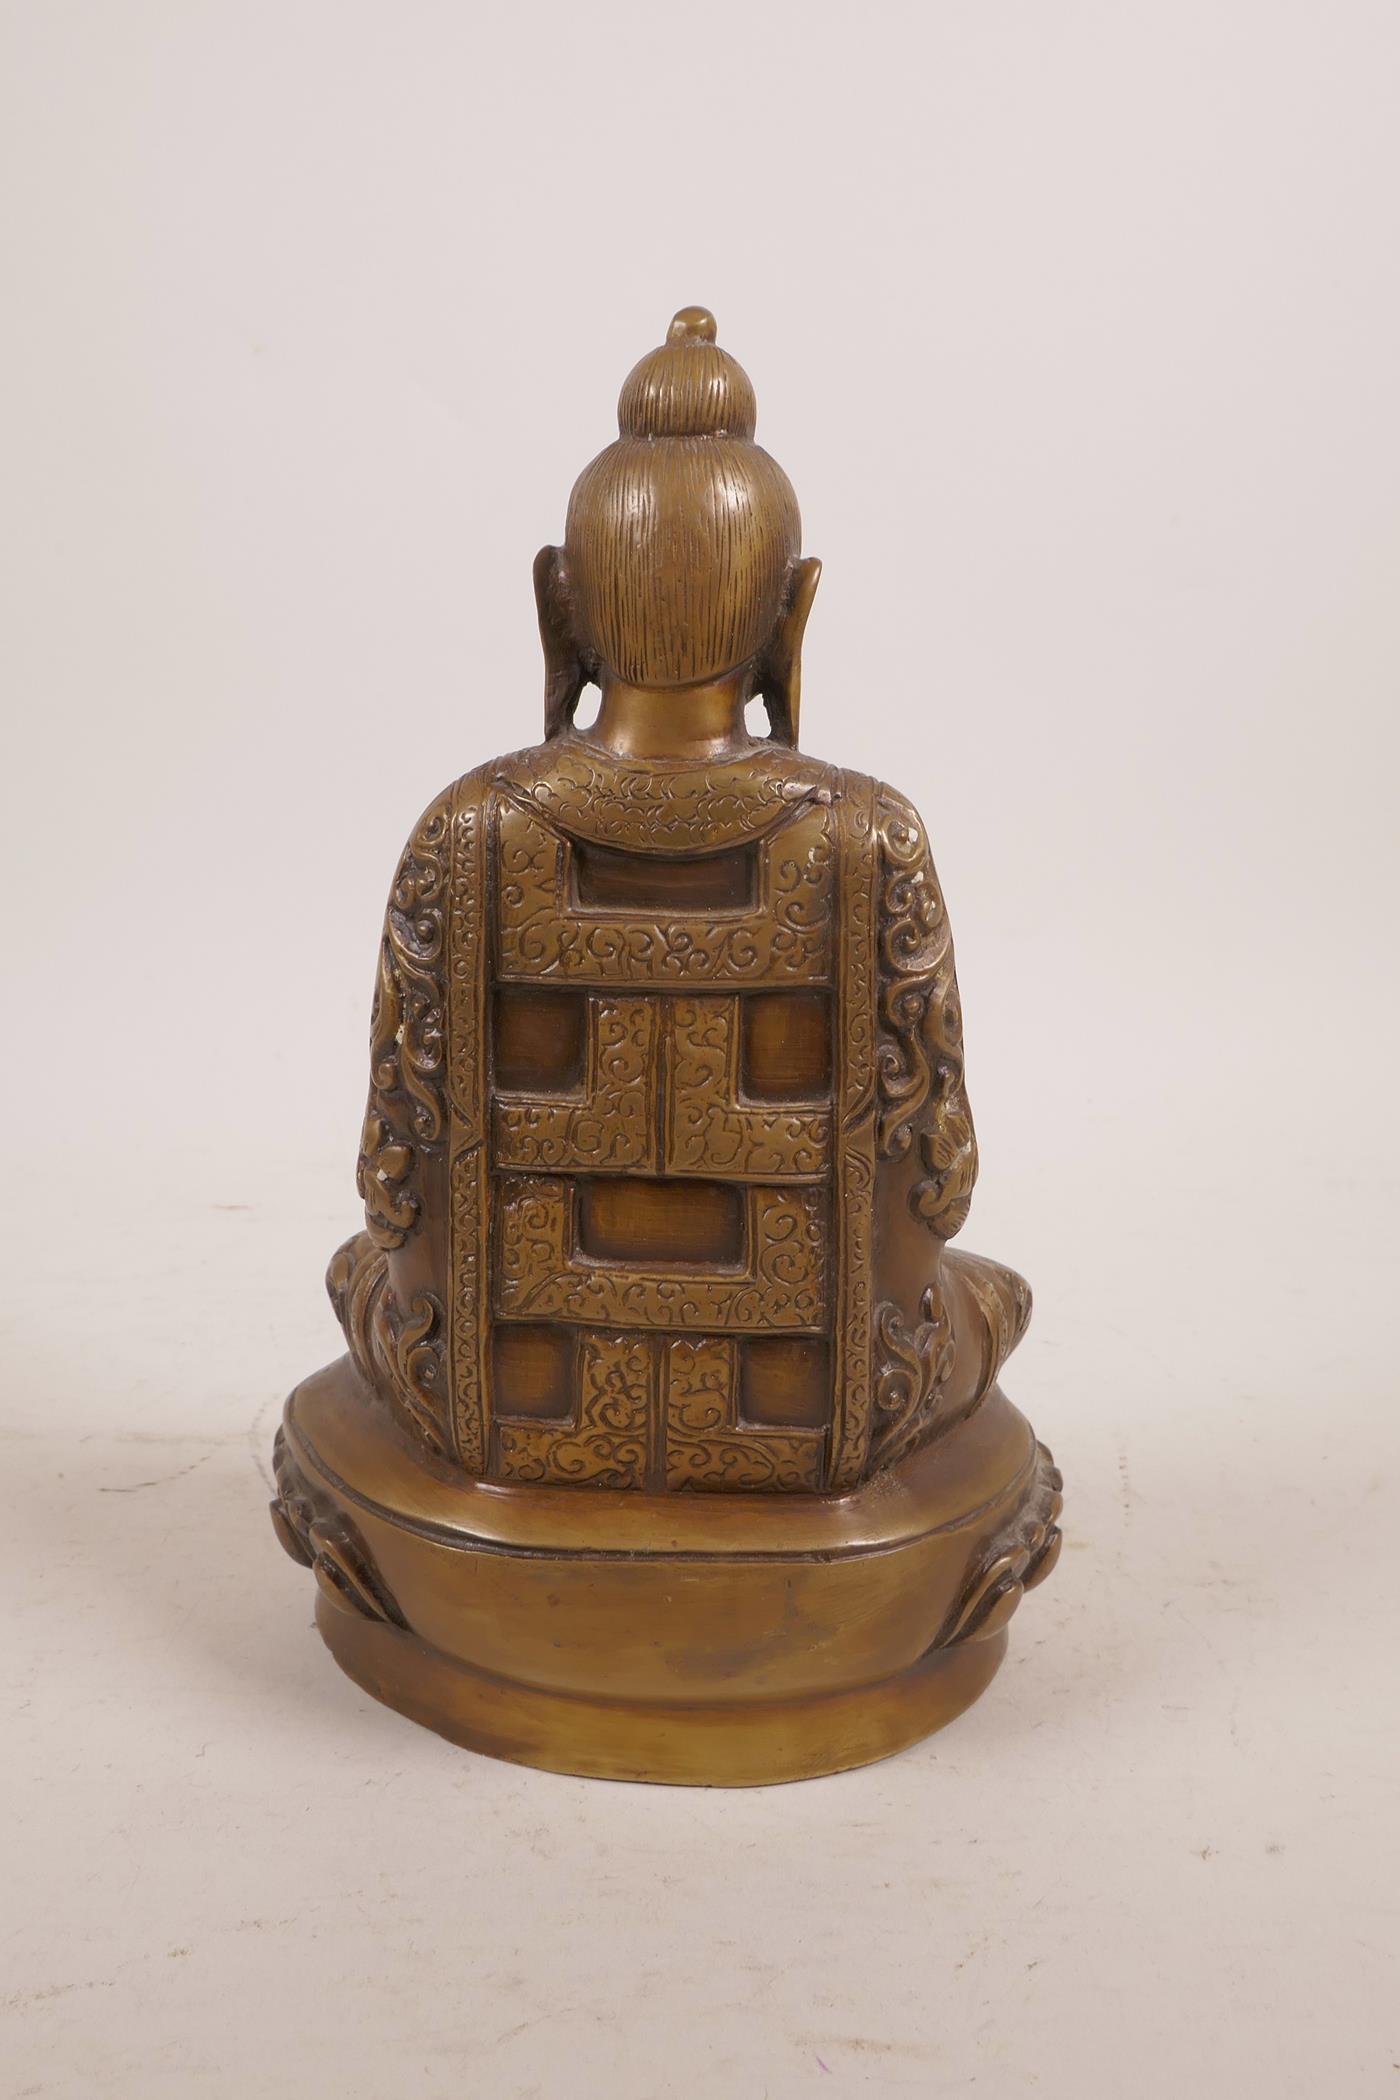 A bronzed metal figure of Buddha, possibly Burmese, 8" high - Image 2 of 2